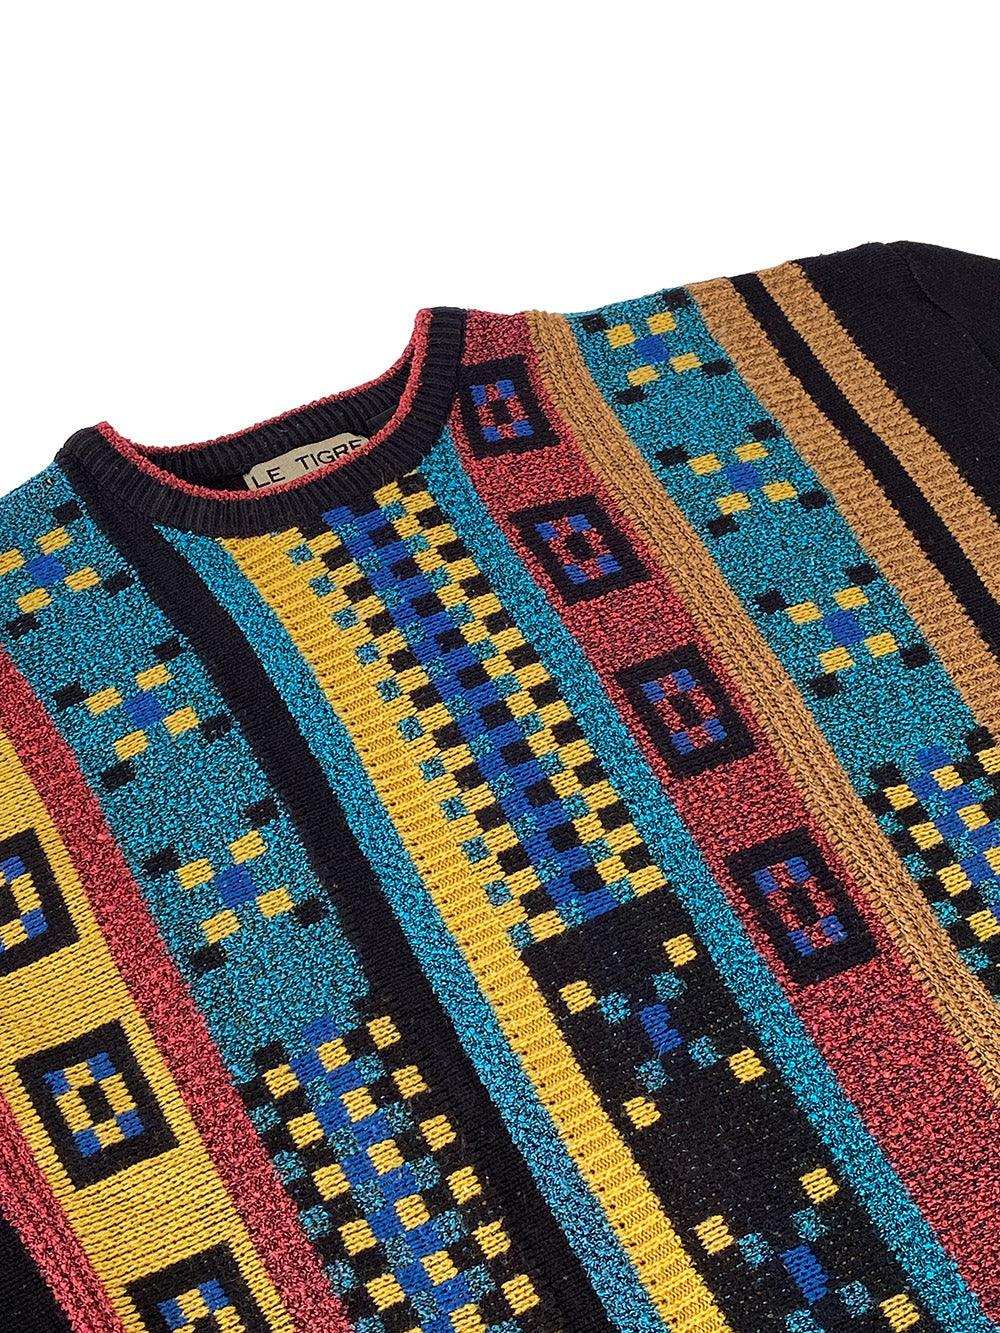 Vintage 80s Le Tigre Geometric Patterned Knit Sweater- Fits Size